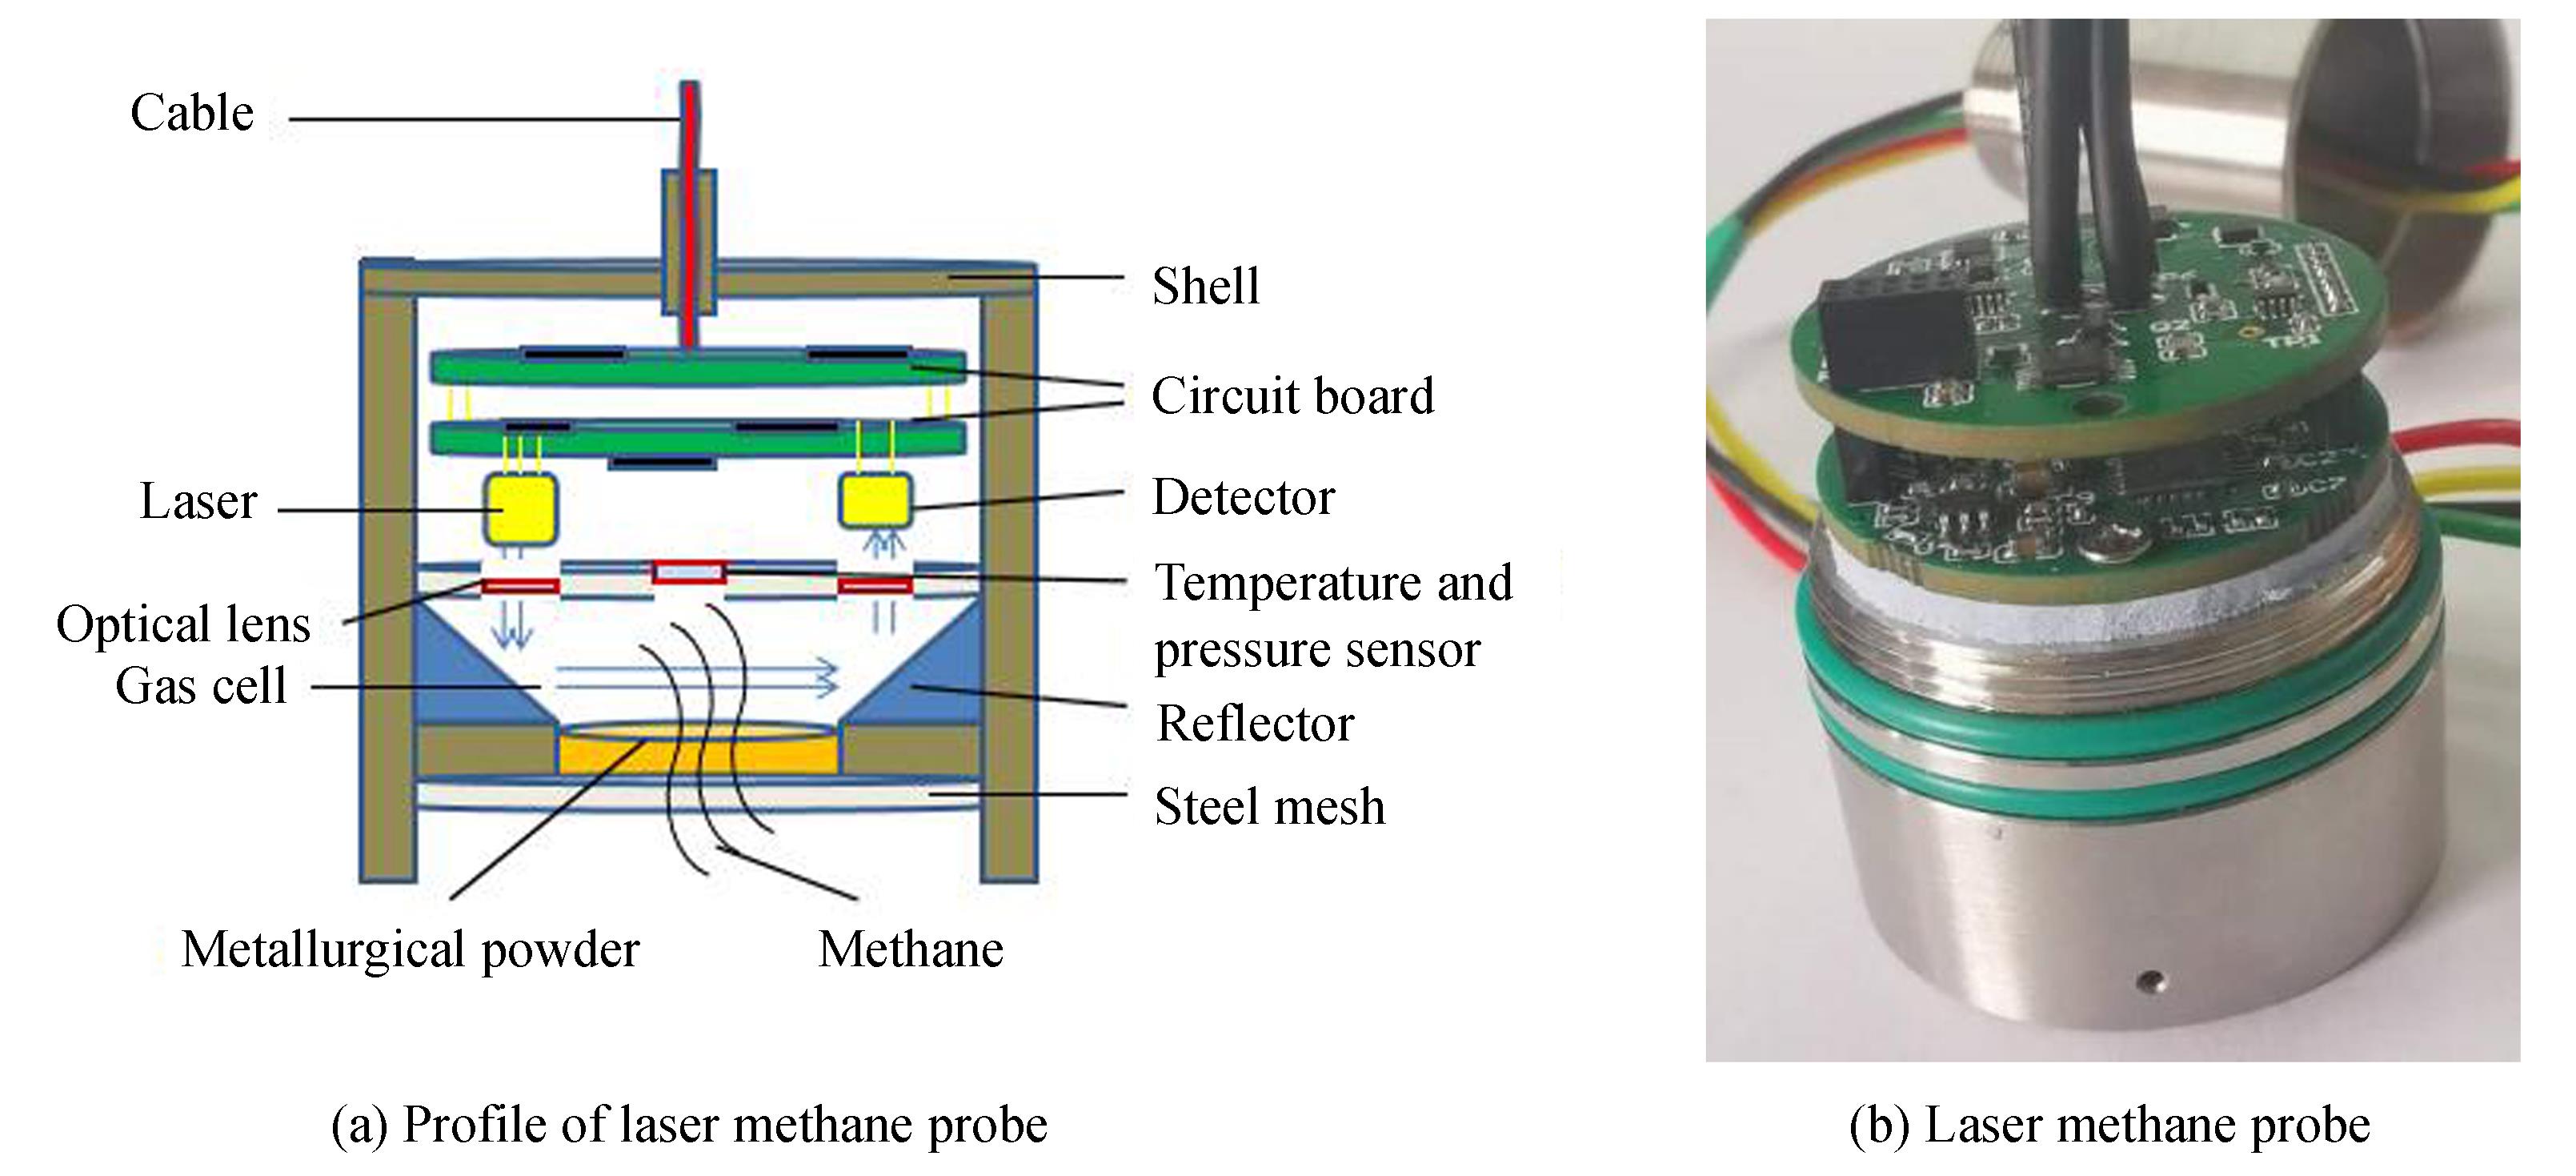 Structure of laser methane sensor probe